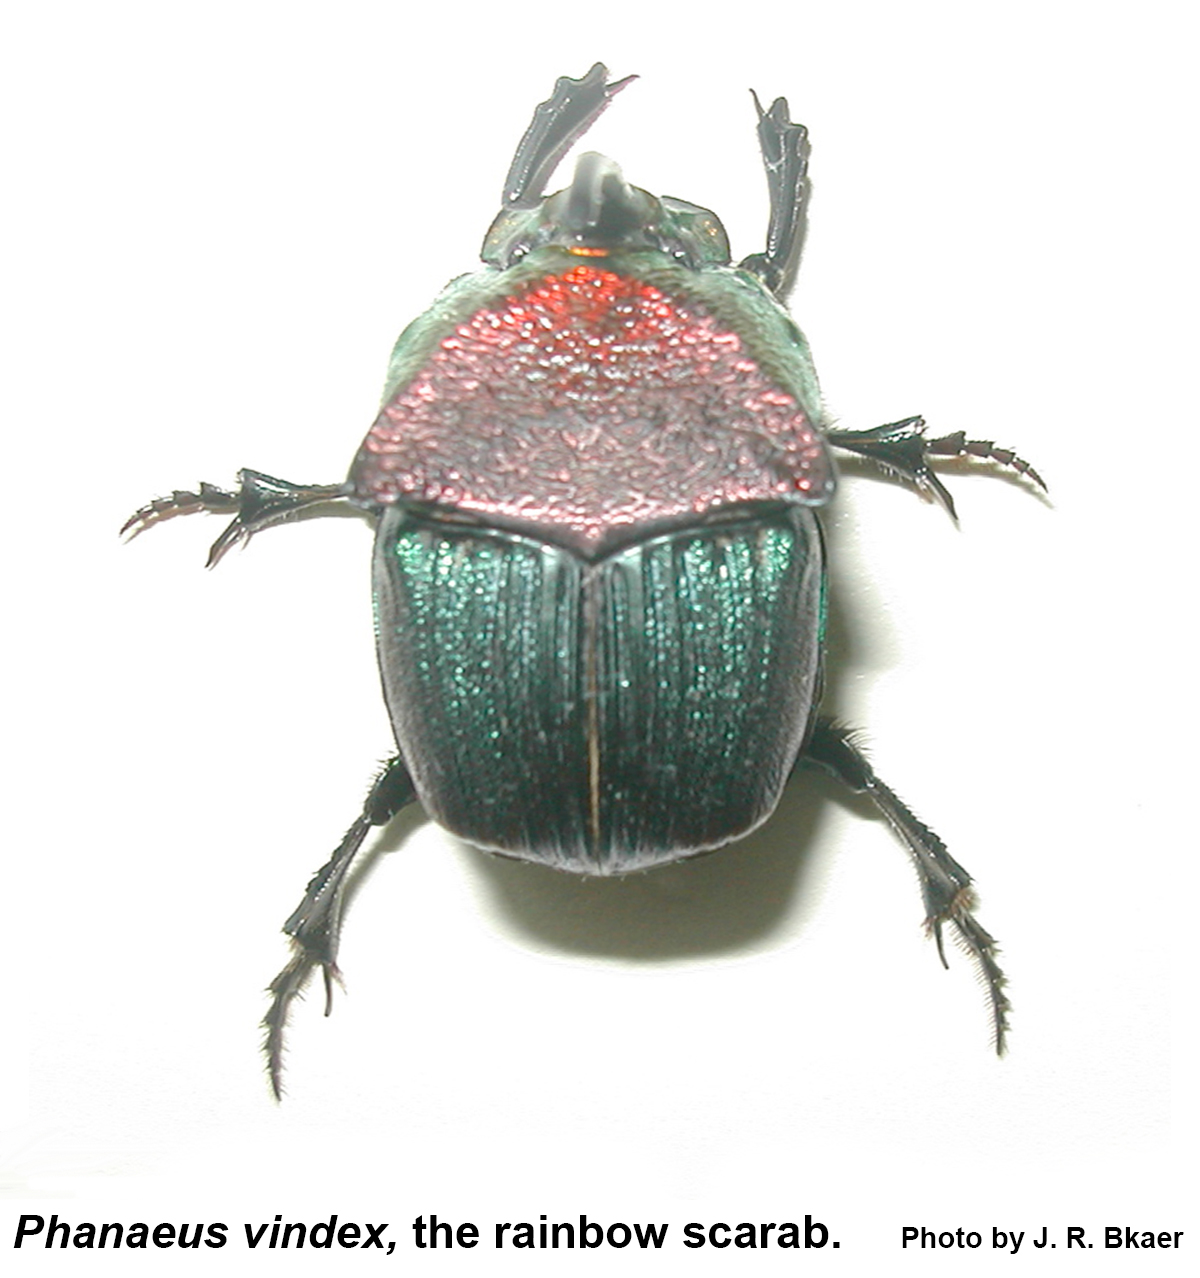 rainbow scarab dorsal view